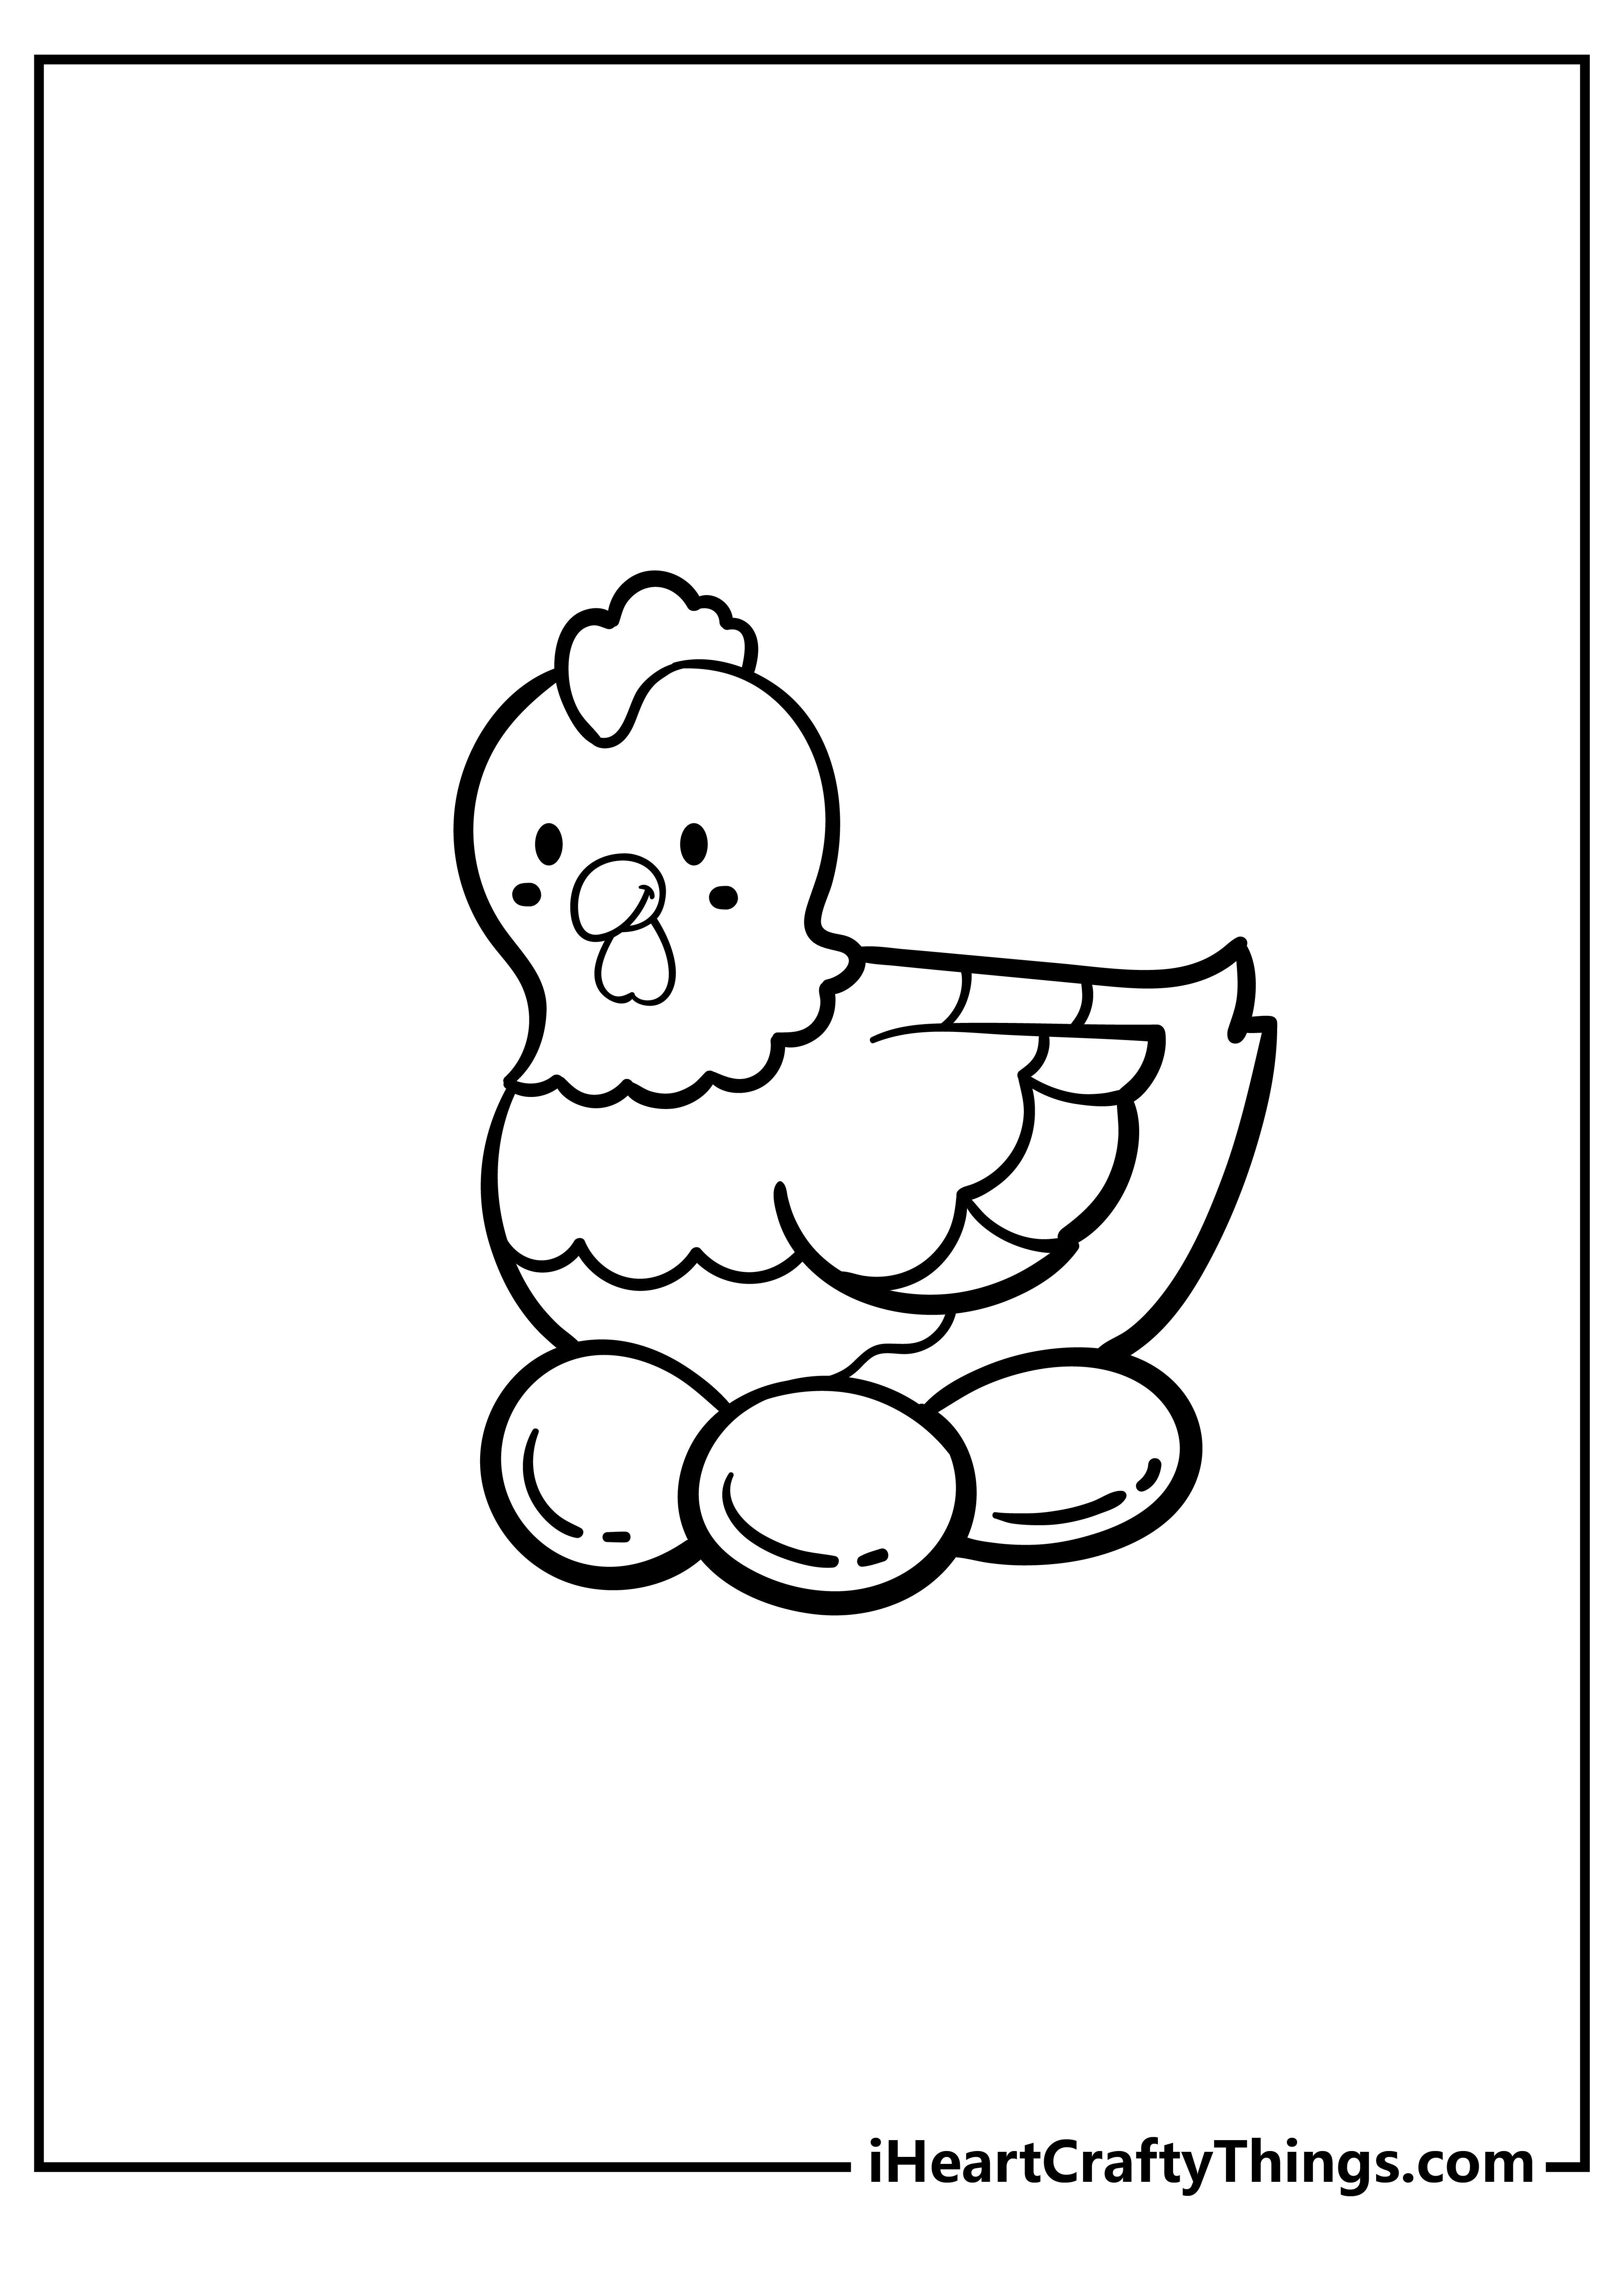 Chicken Coloring Original Sheet for children free download